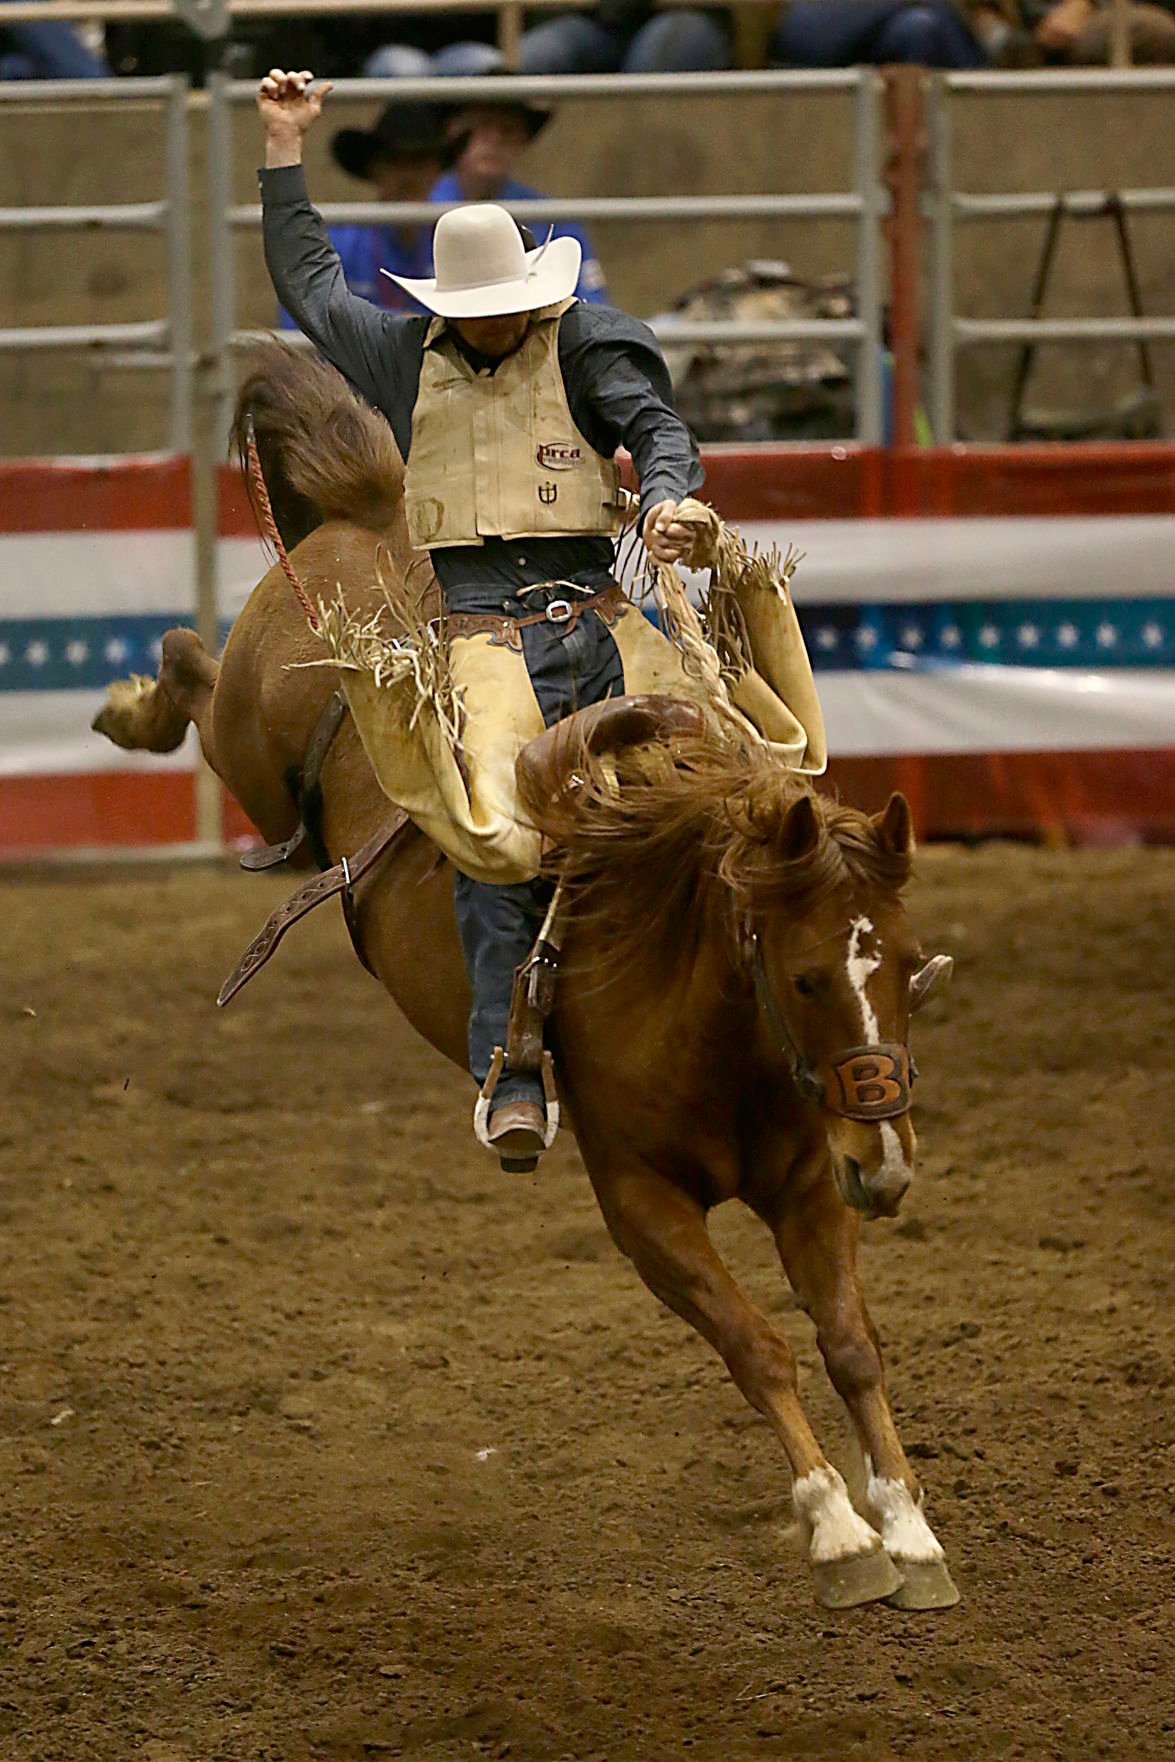 High Desert Stampede rodeo makes it return to Redmond Sports